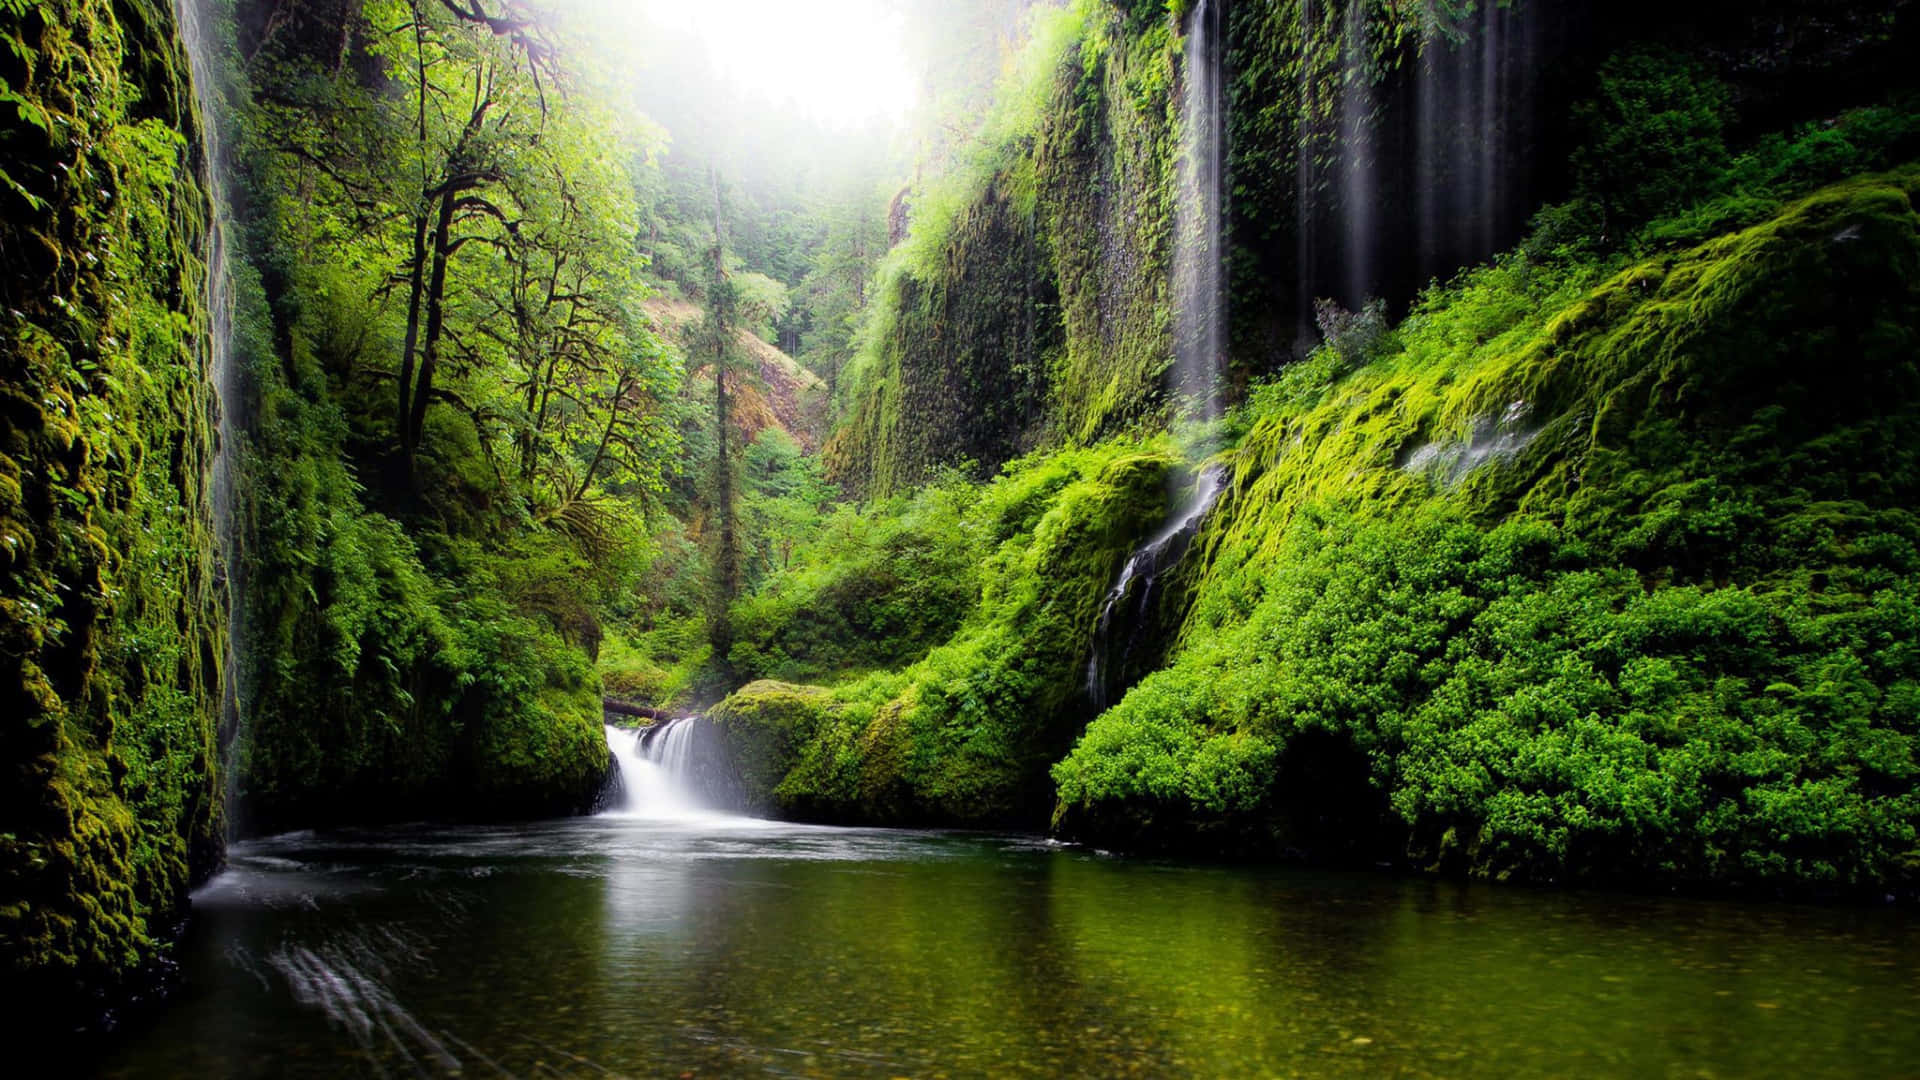 The Majestic Beauty of Waterfalls".